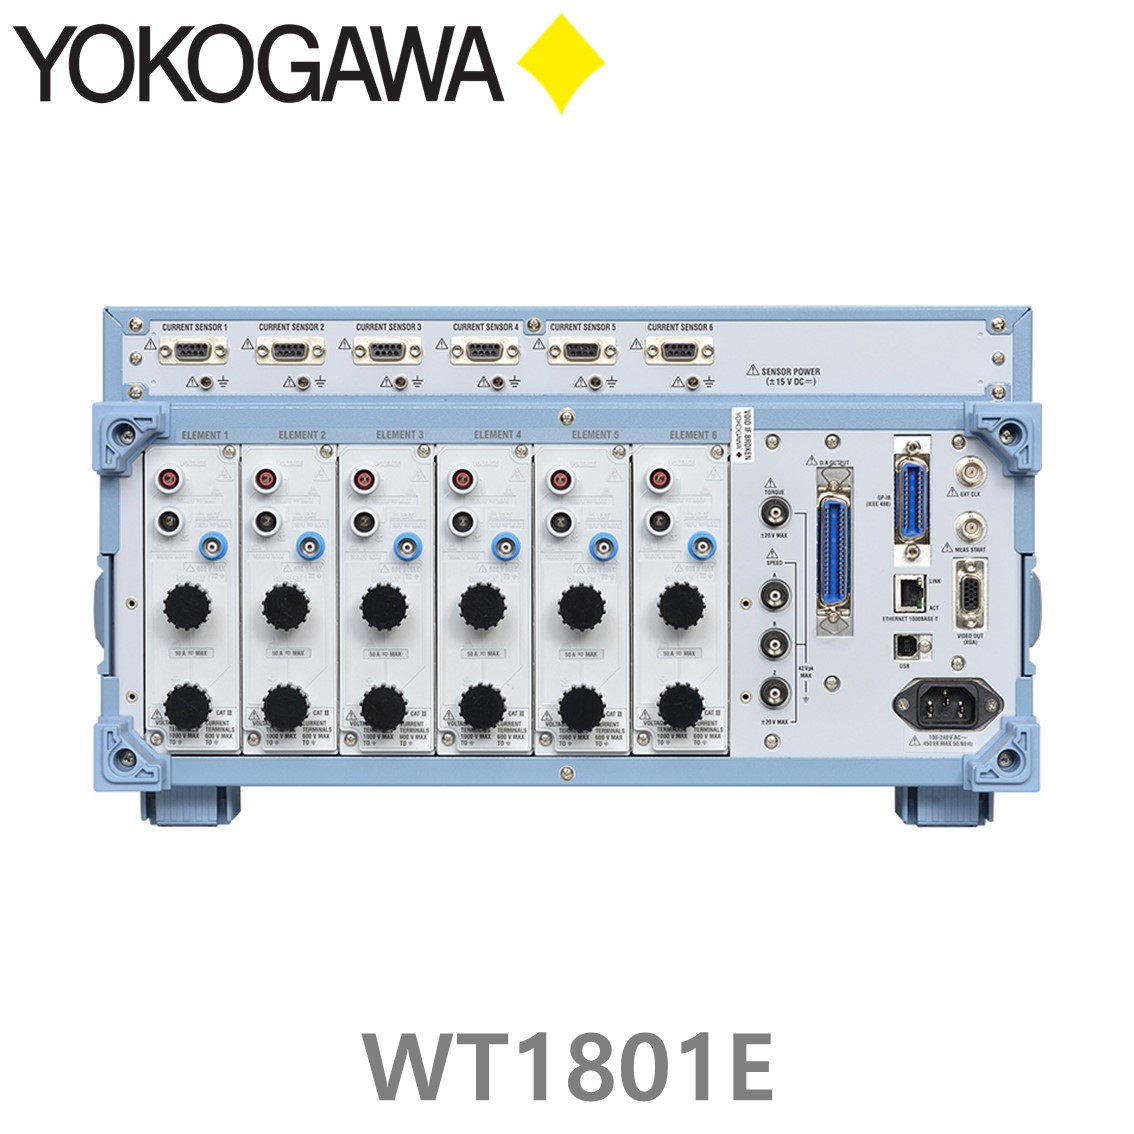 [ YOKOGAWA ] WT1801E 요꼬가와 전력분석기, 고성능 전력분석기